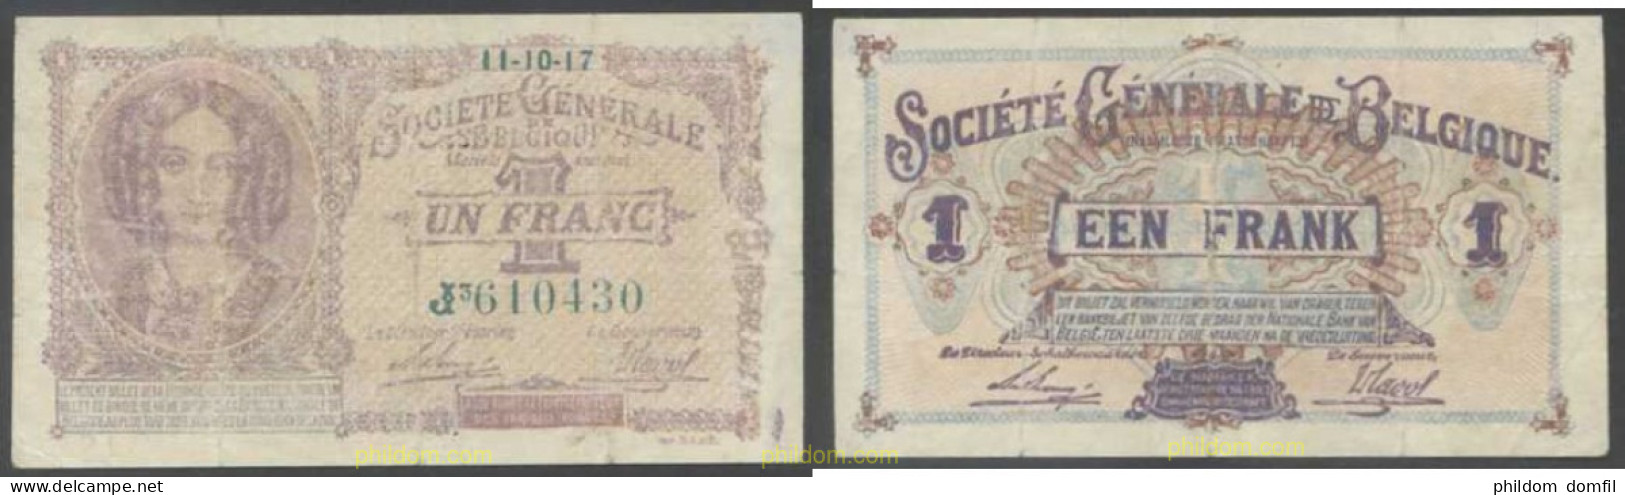 7882 BELGICA 1917 BELGIQUE 1 FRANC 1917 - Colecciones